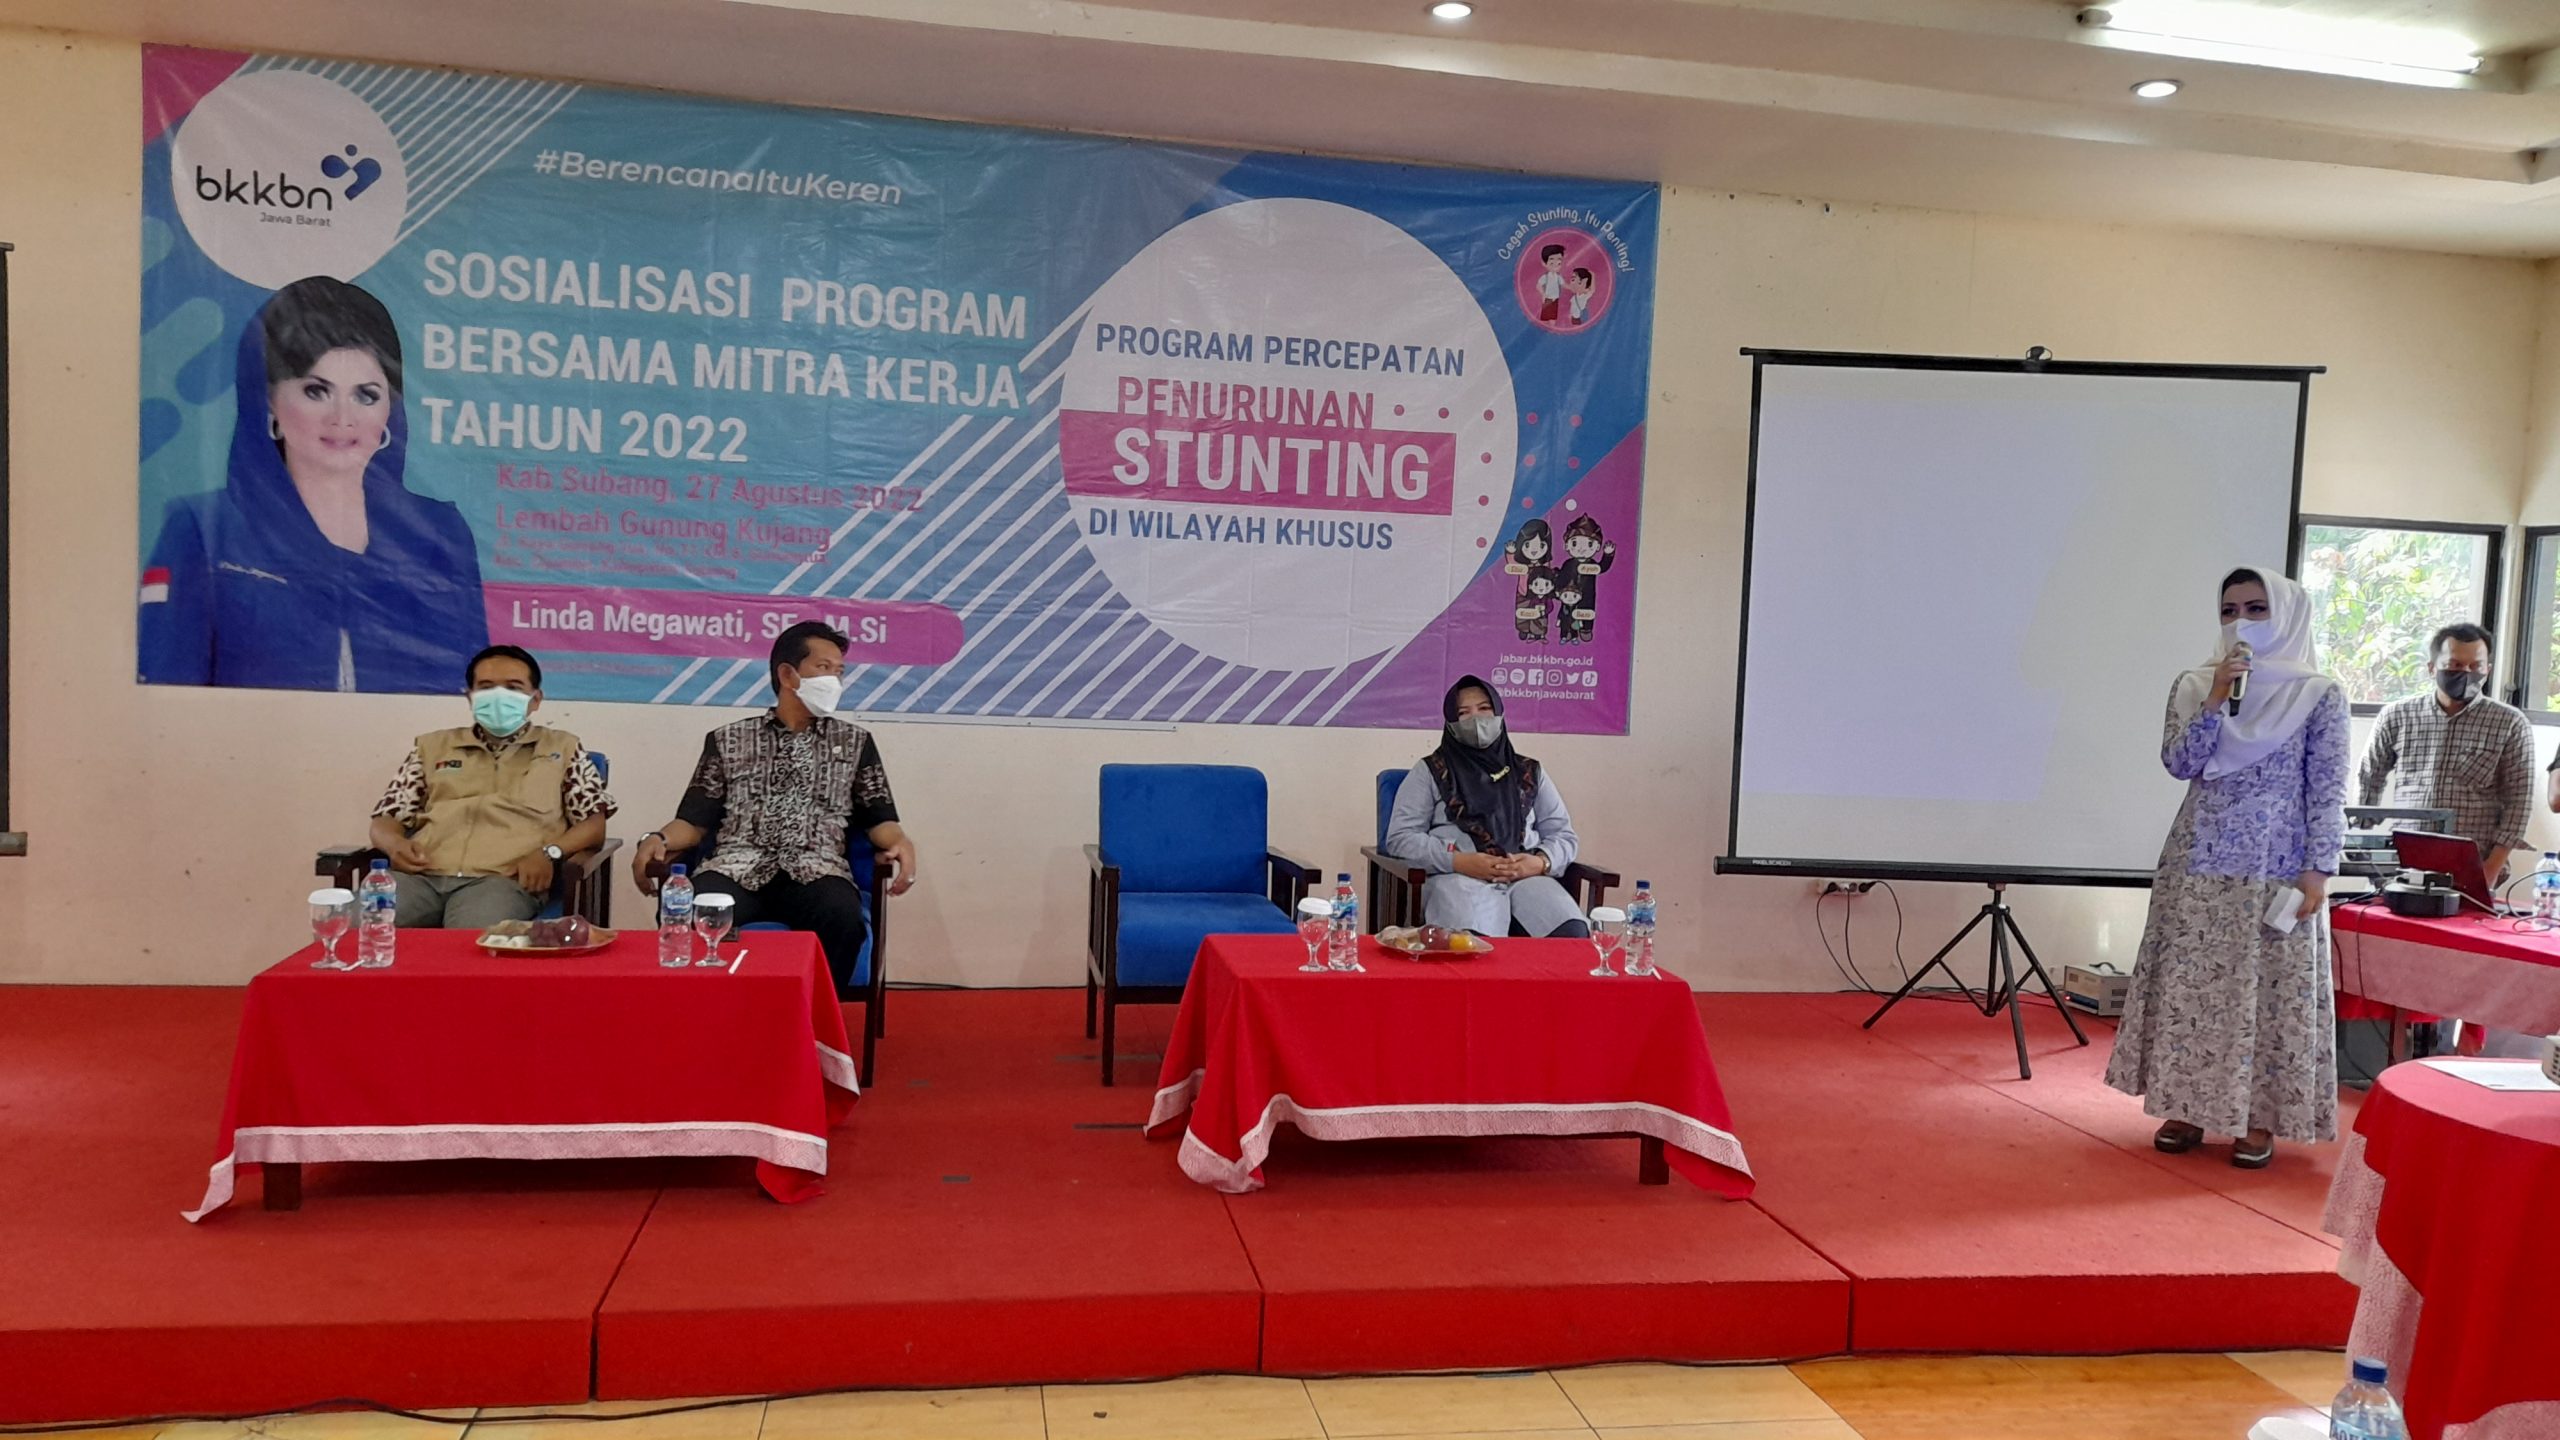 DPR RI Komisi IX dan BKKBN Jawa Barat Sosialisasikan Percepatan Penurunan Stunting